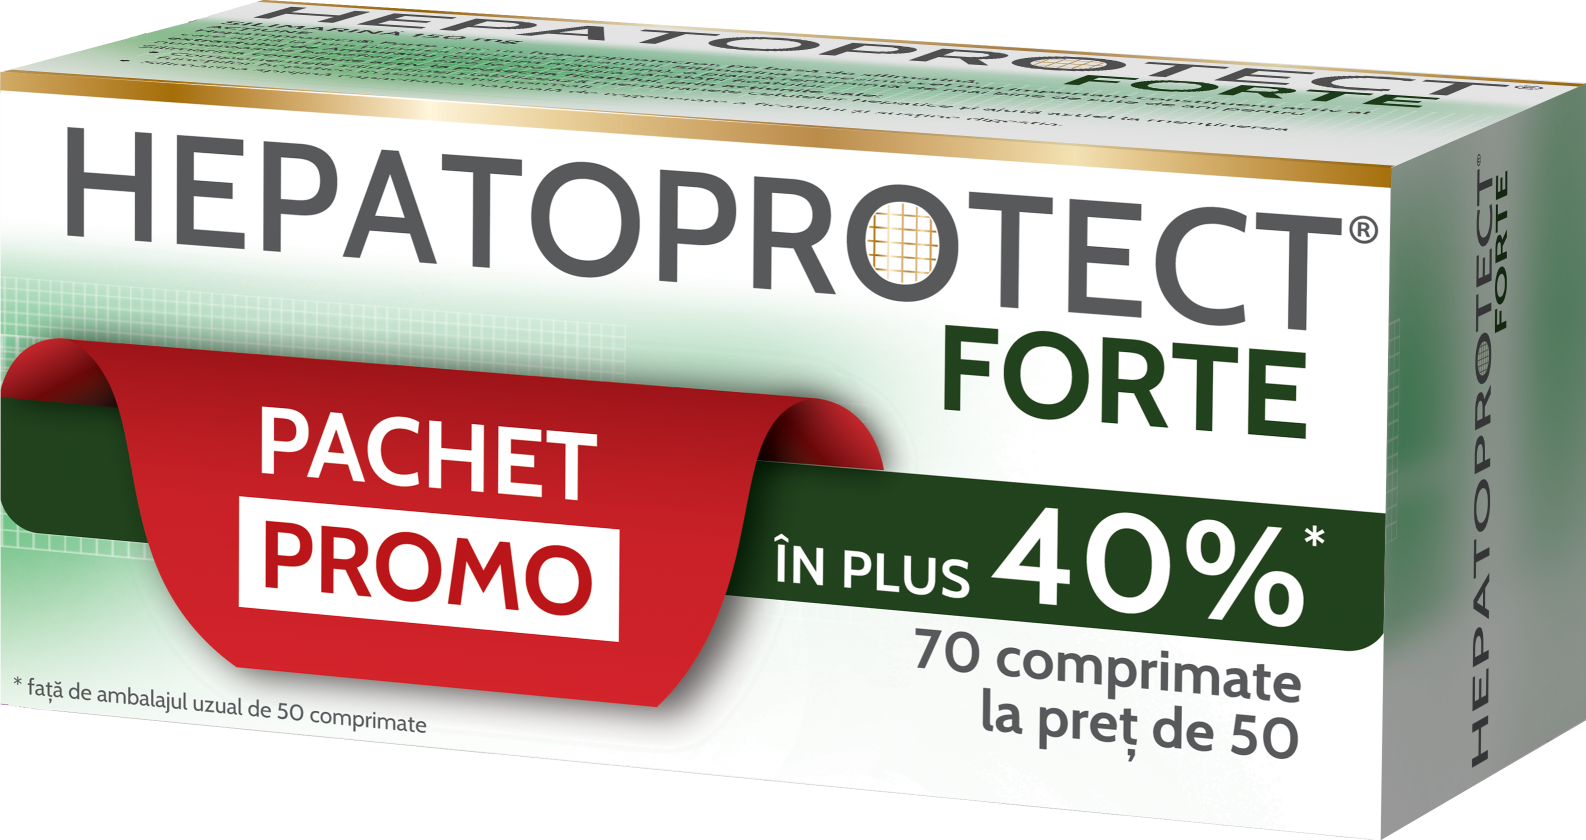 Hepatoprotect Forte Pachet Promo, 70 comprimate la pret de 50 comprimate, Biofarm